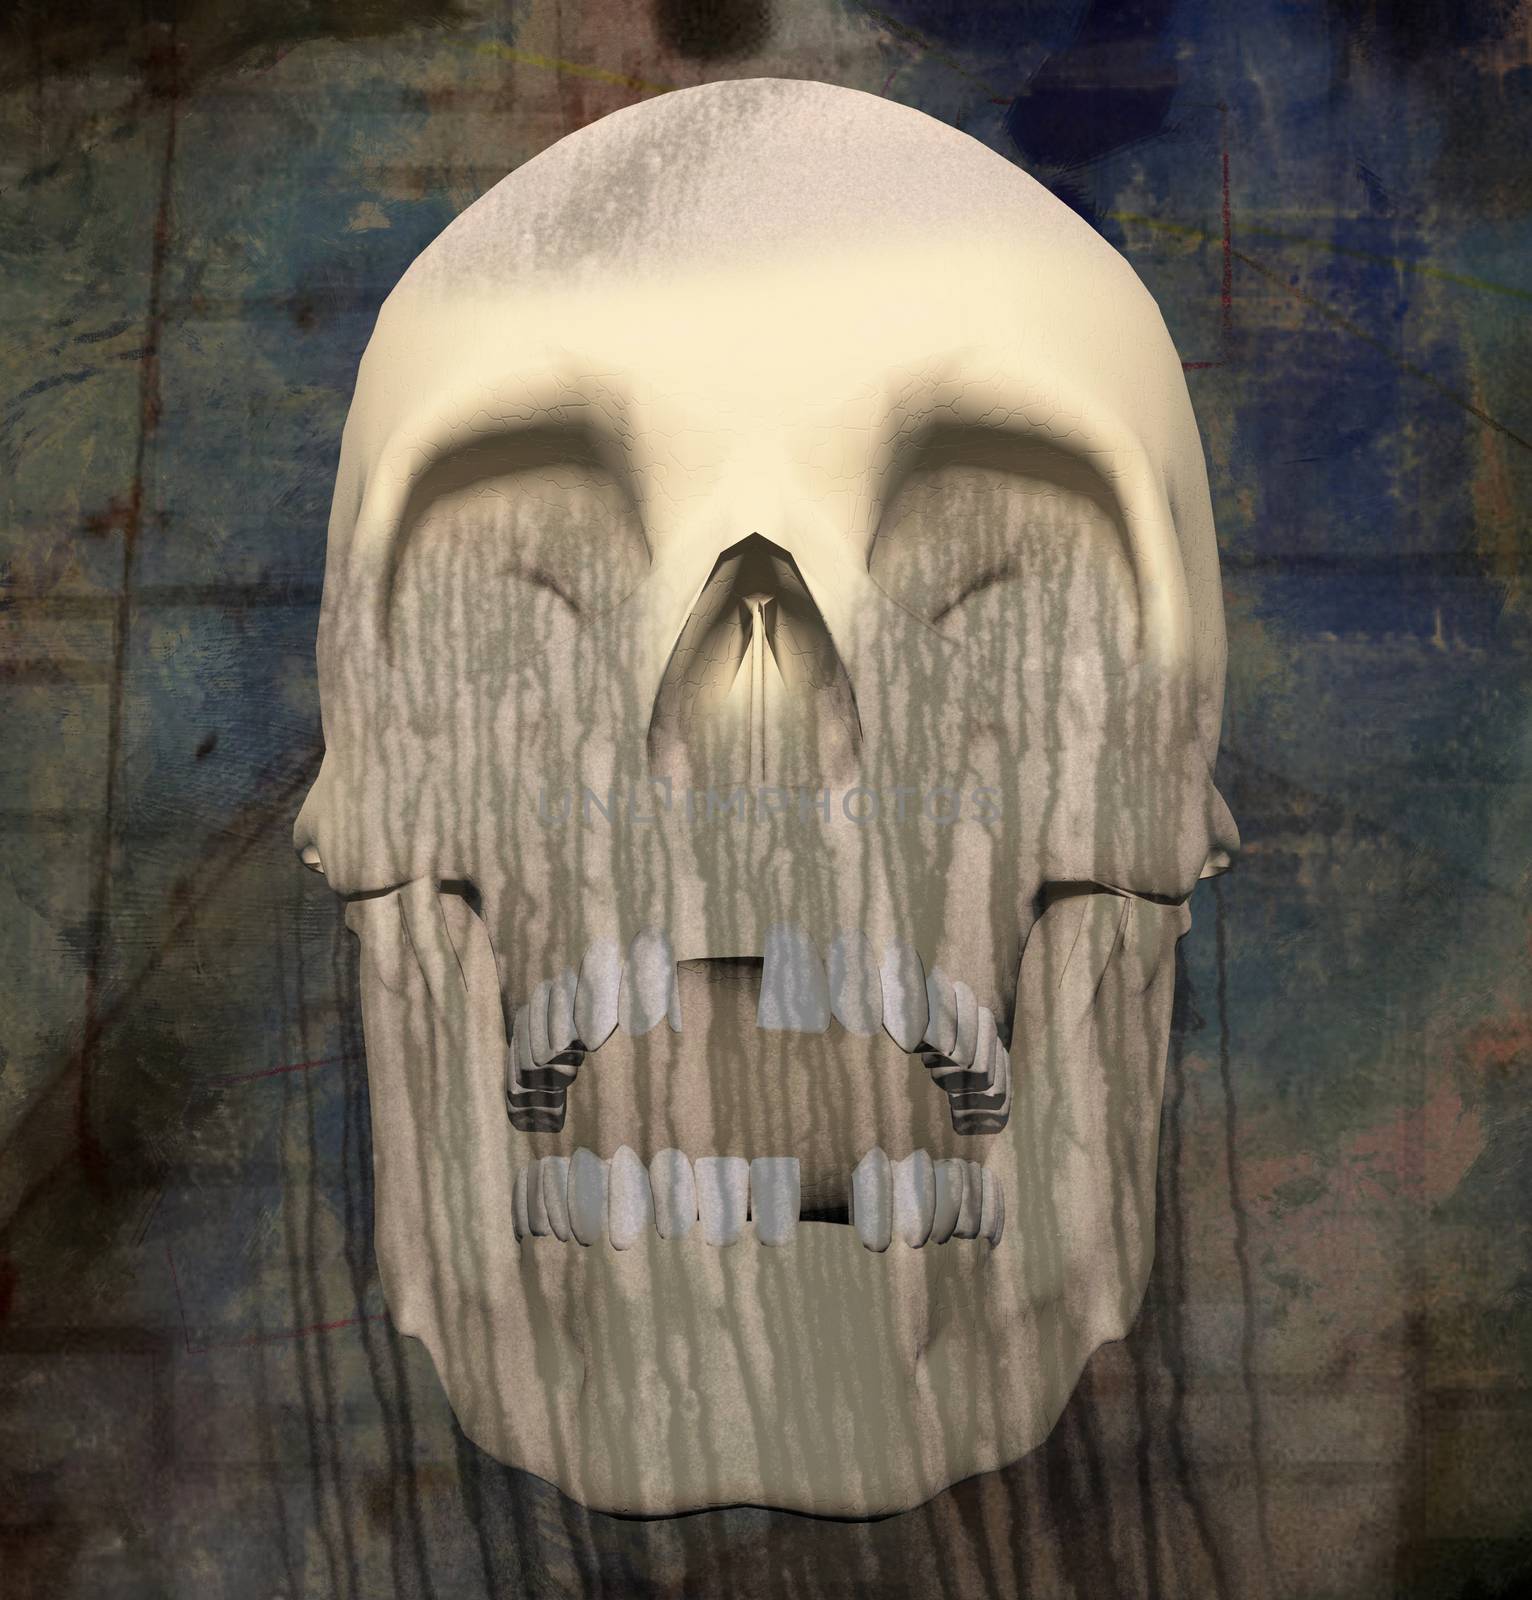 Skull with broken teeth. 3D rendering